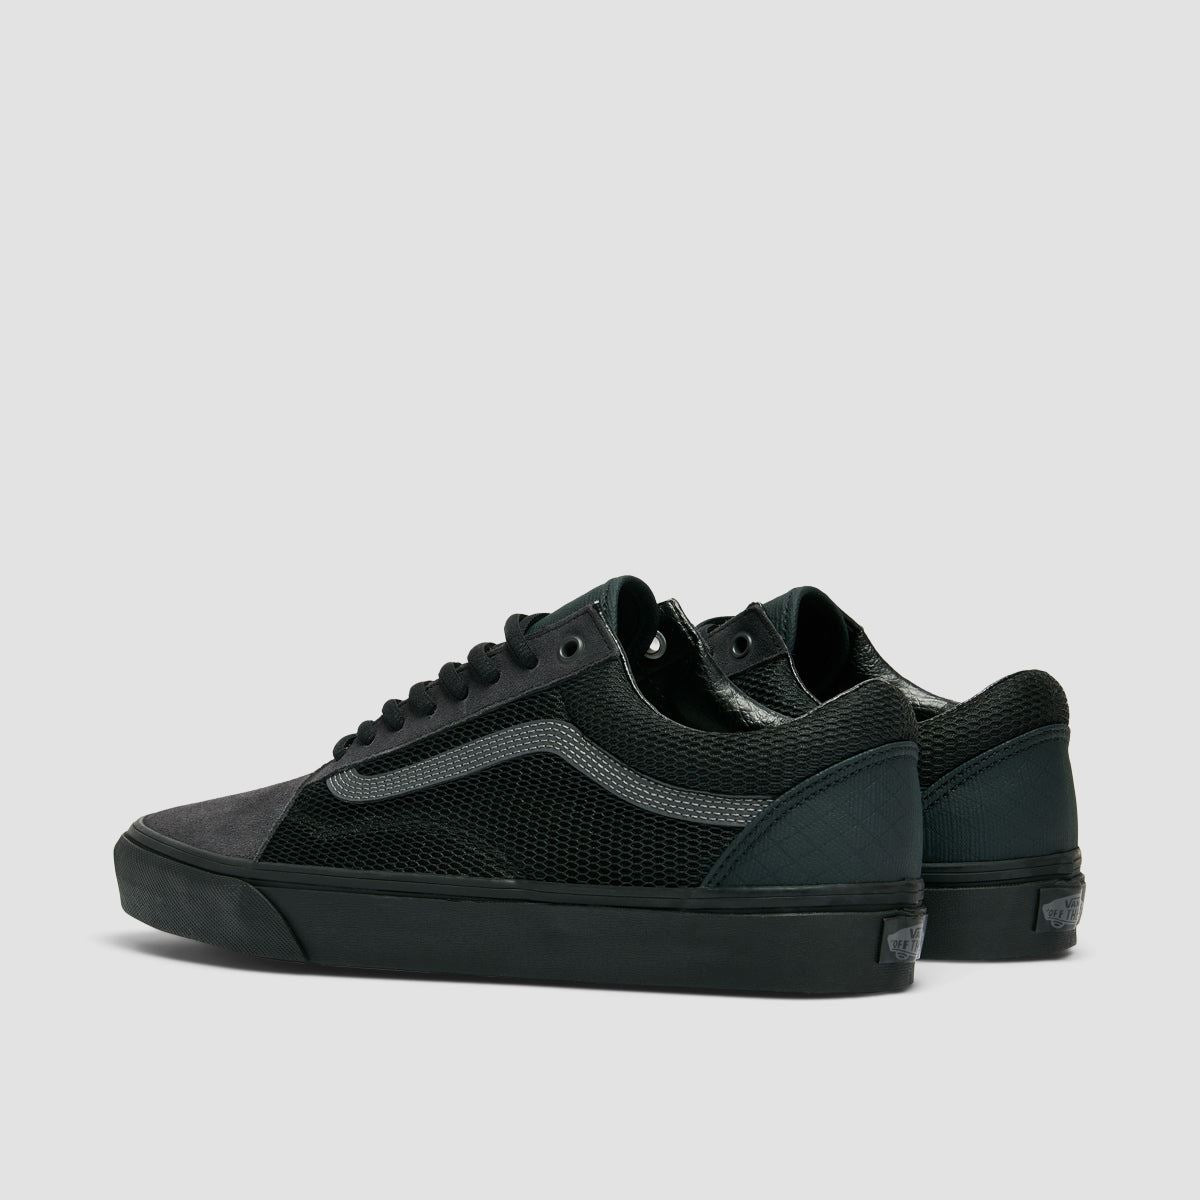 Vans Old Skool Shoes - Ballistic Mix Black/Black